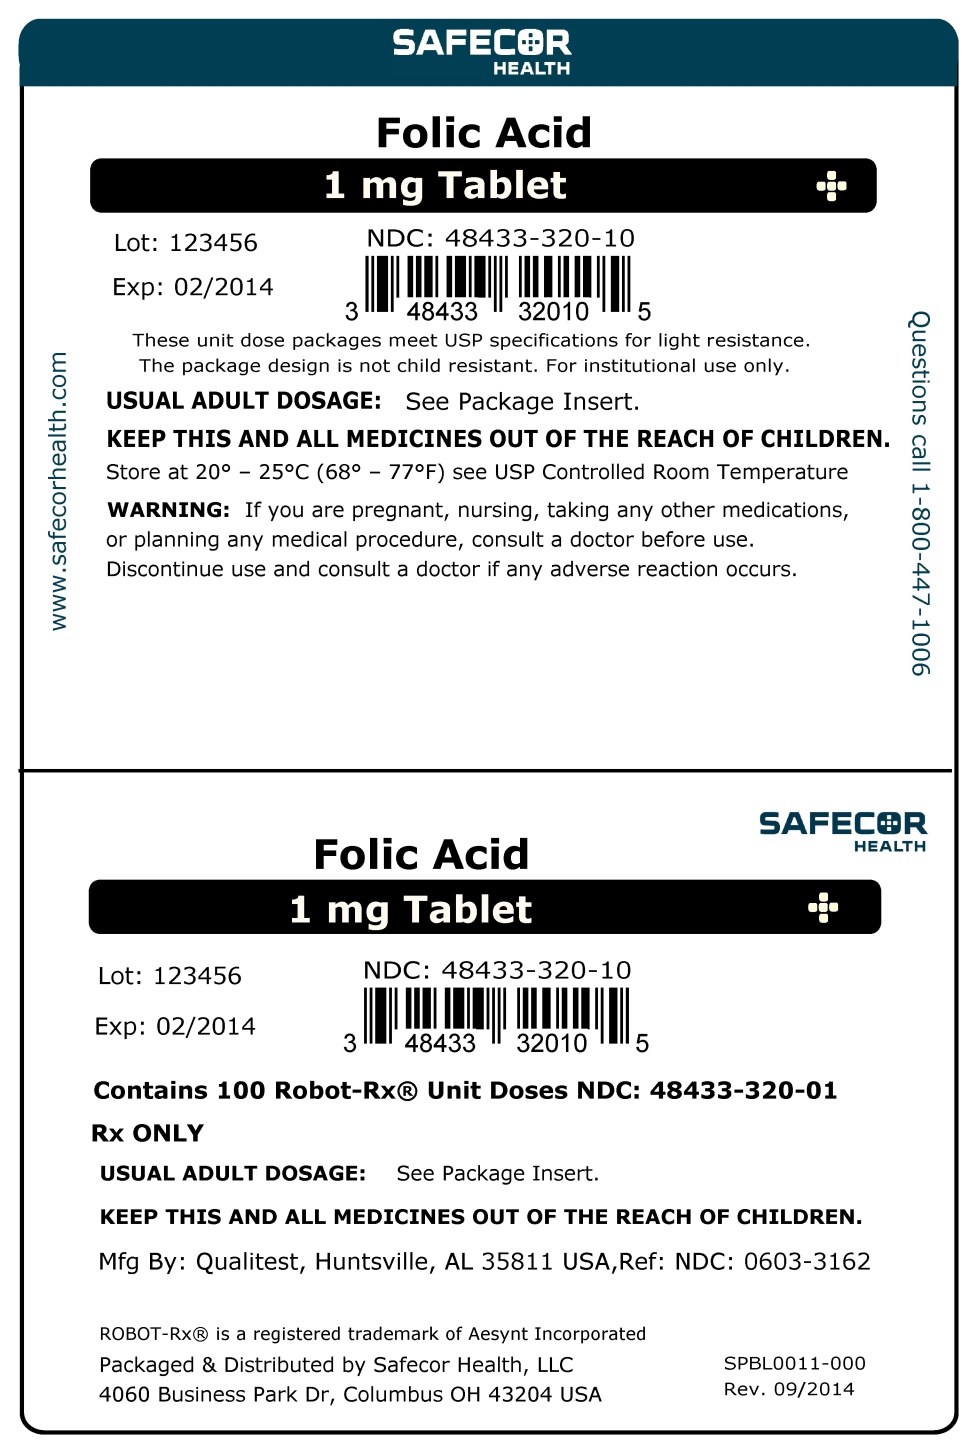 Folic Acid Robot unit dose box label